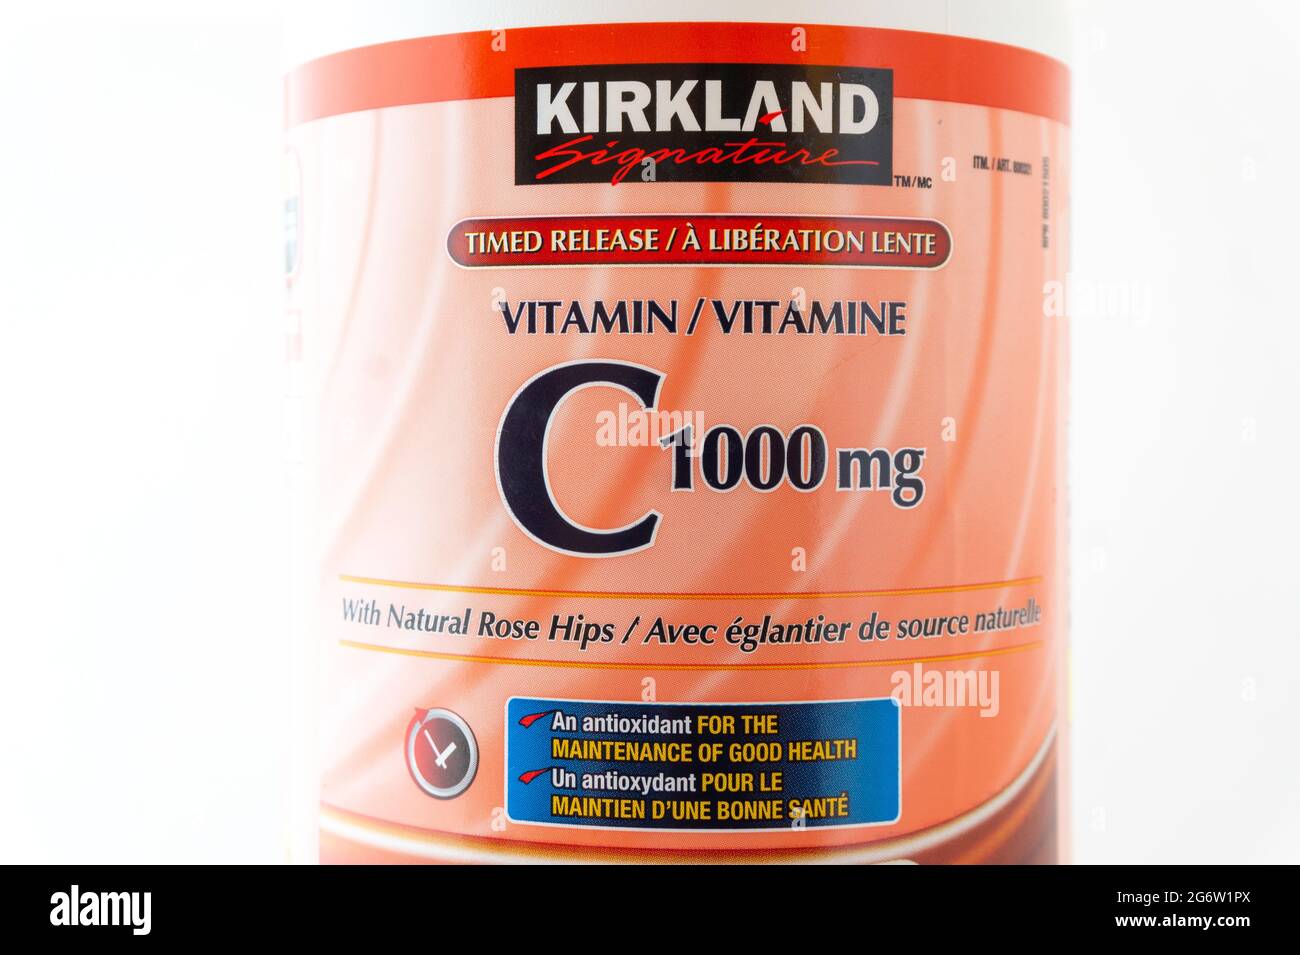 Kirkland Signature Vitamin C 1000mg in plastic bottle Stock Photo